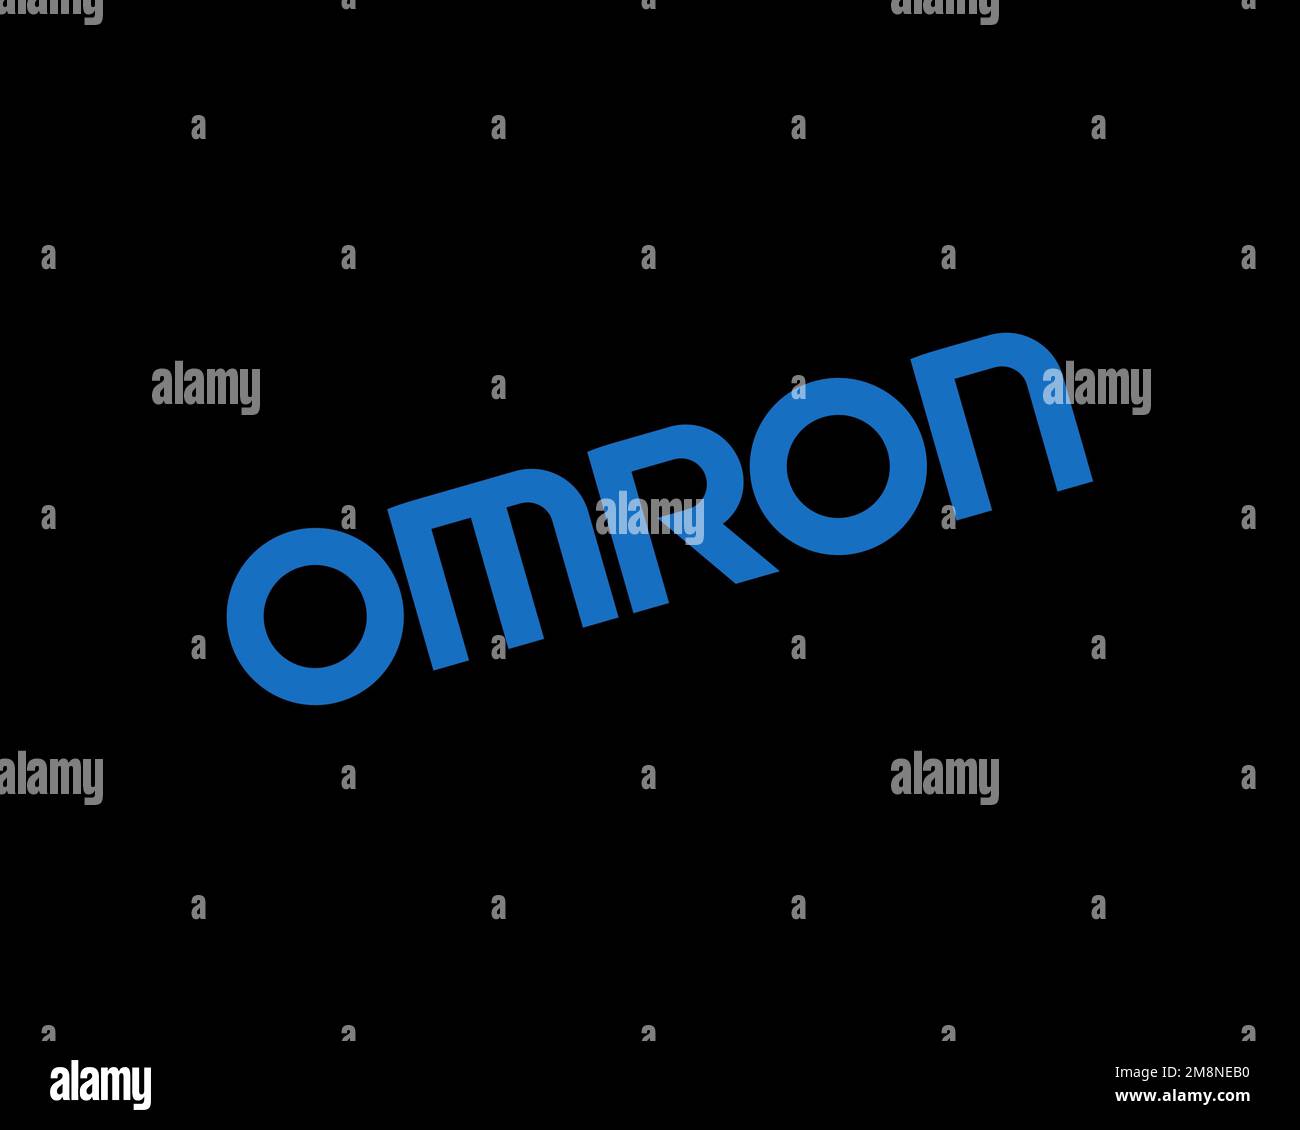 https://c8.alamy.com/comp/2M8NEB0/omron-rotated-logo-black-background-2M8NEB0.jpg